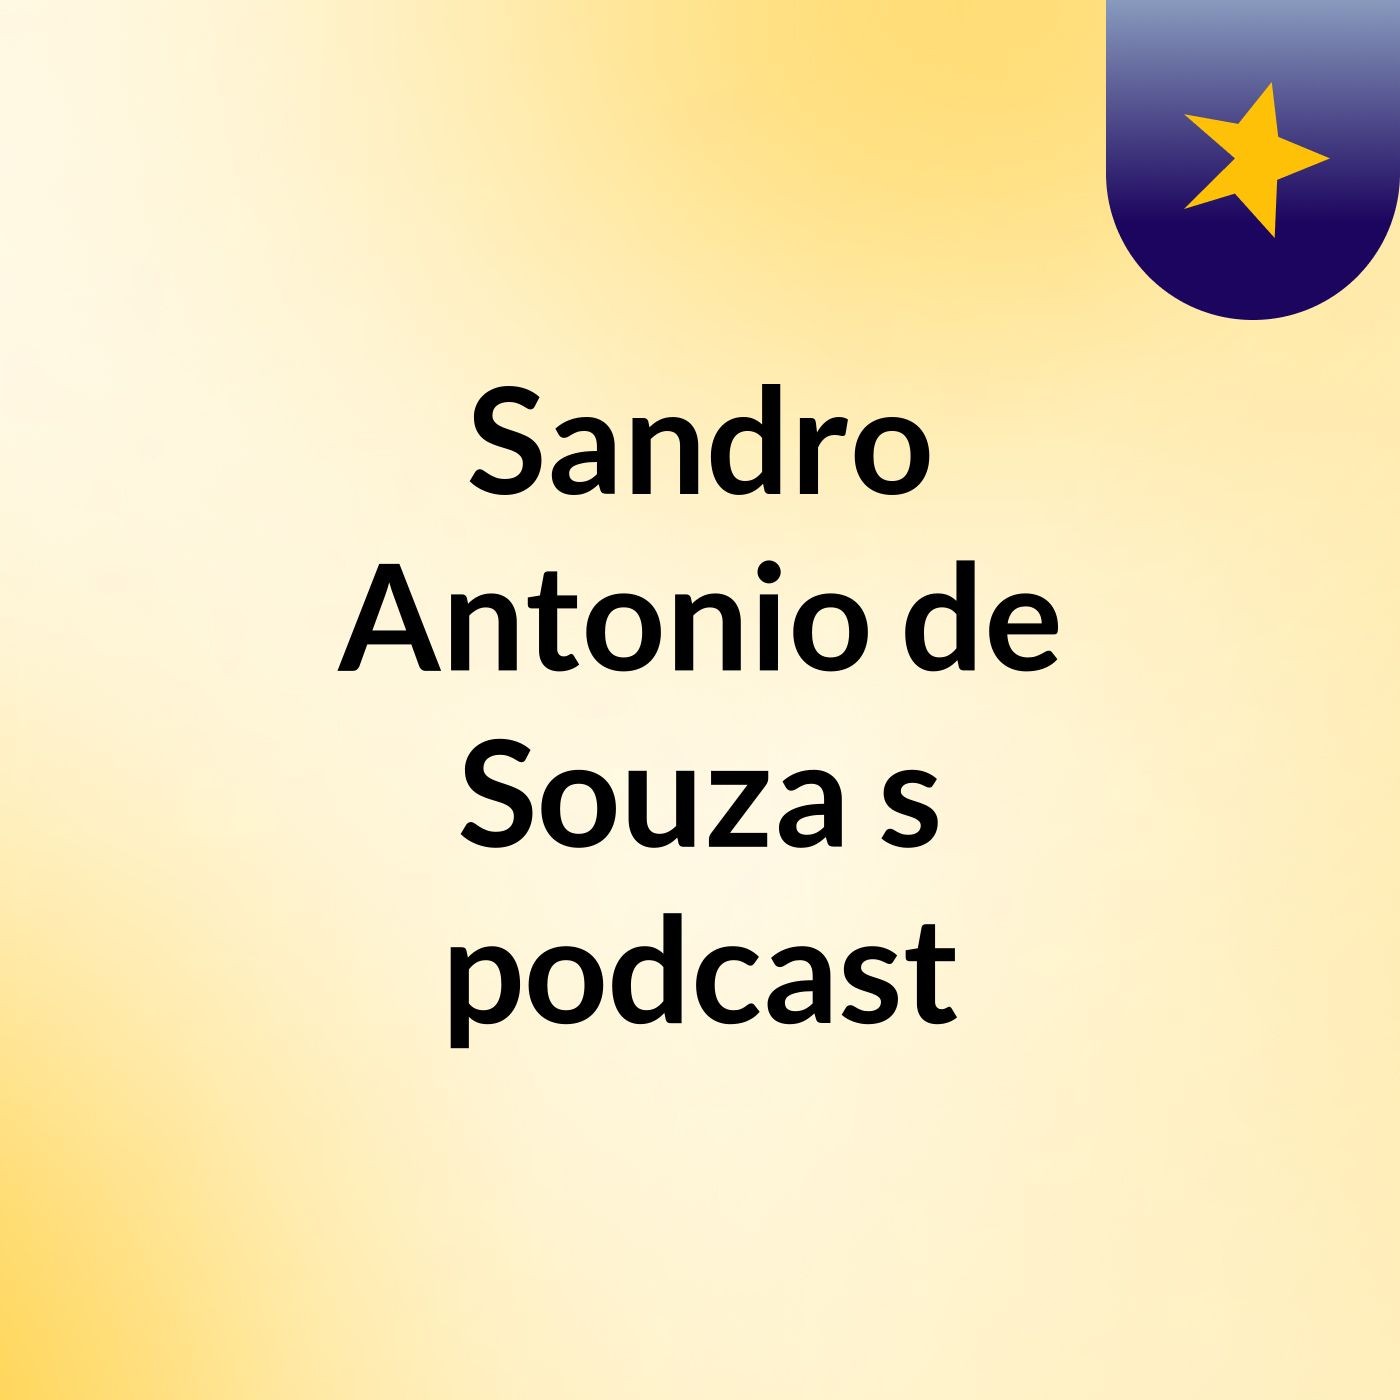 Sandro Antonio de Souza's podcast